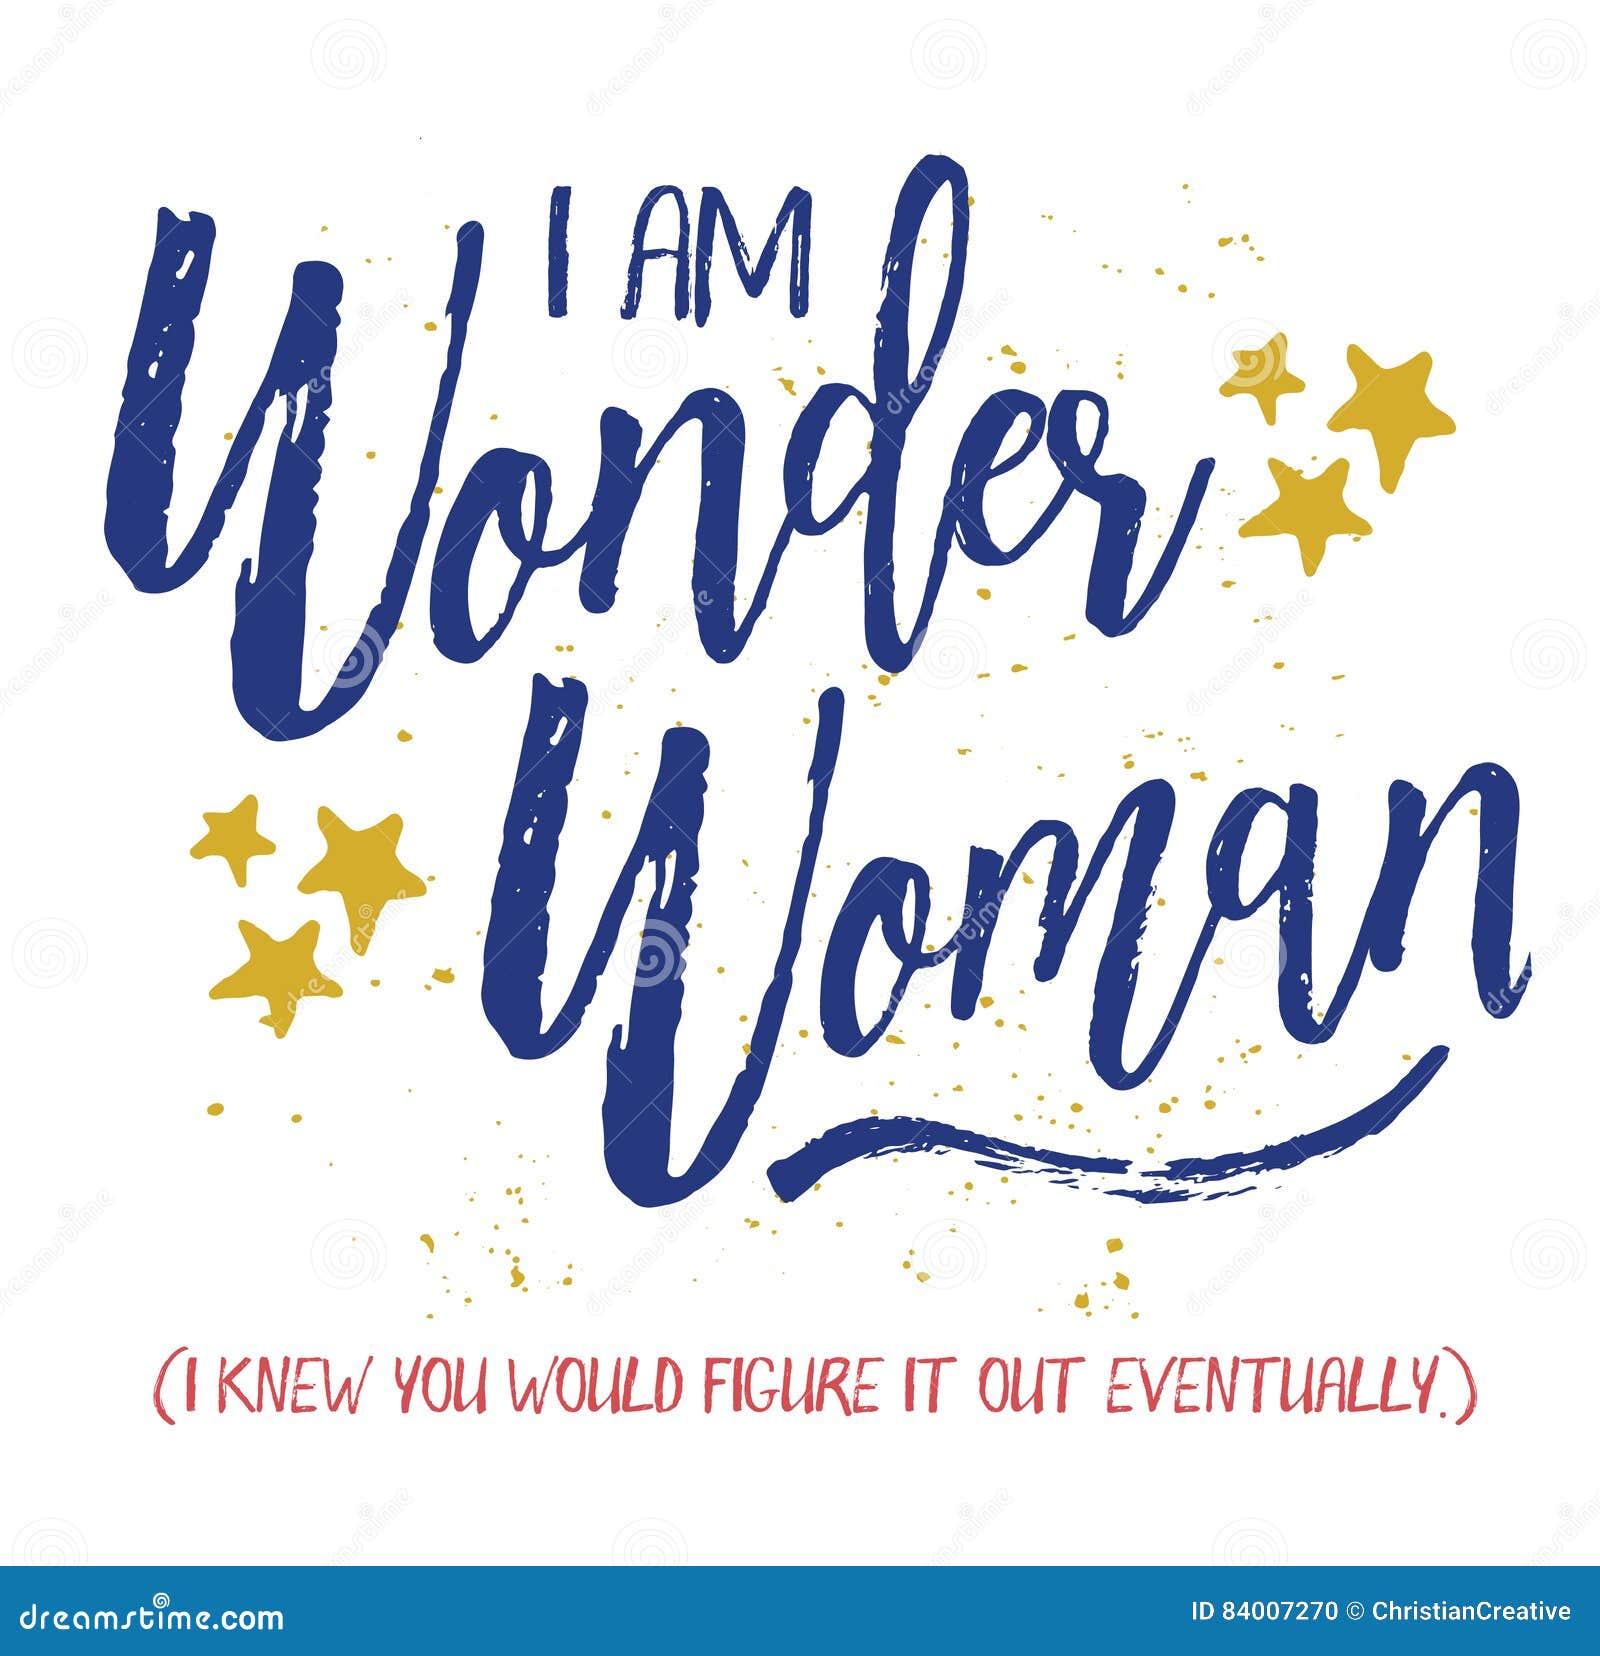 i am wonder woman,